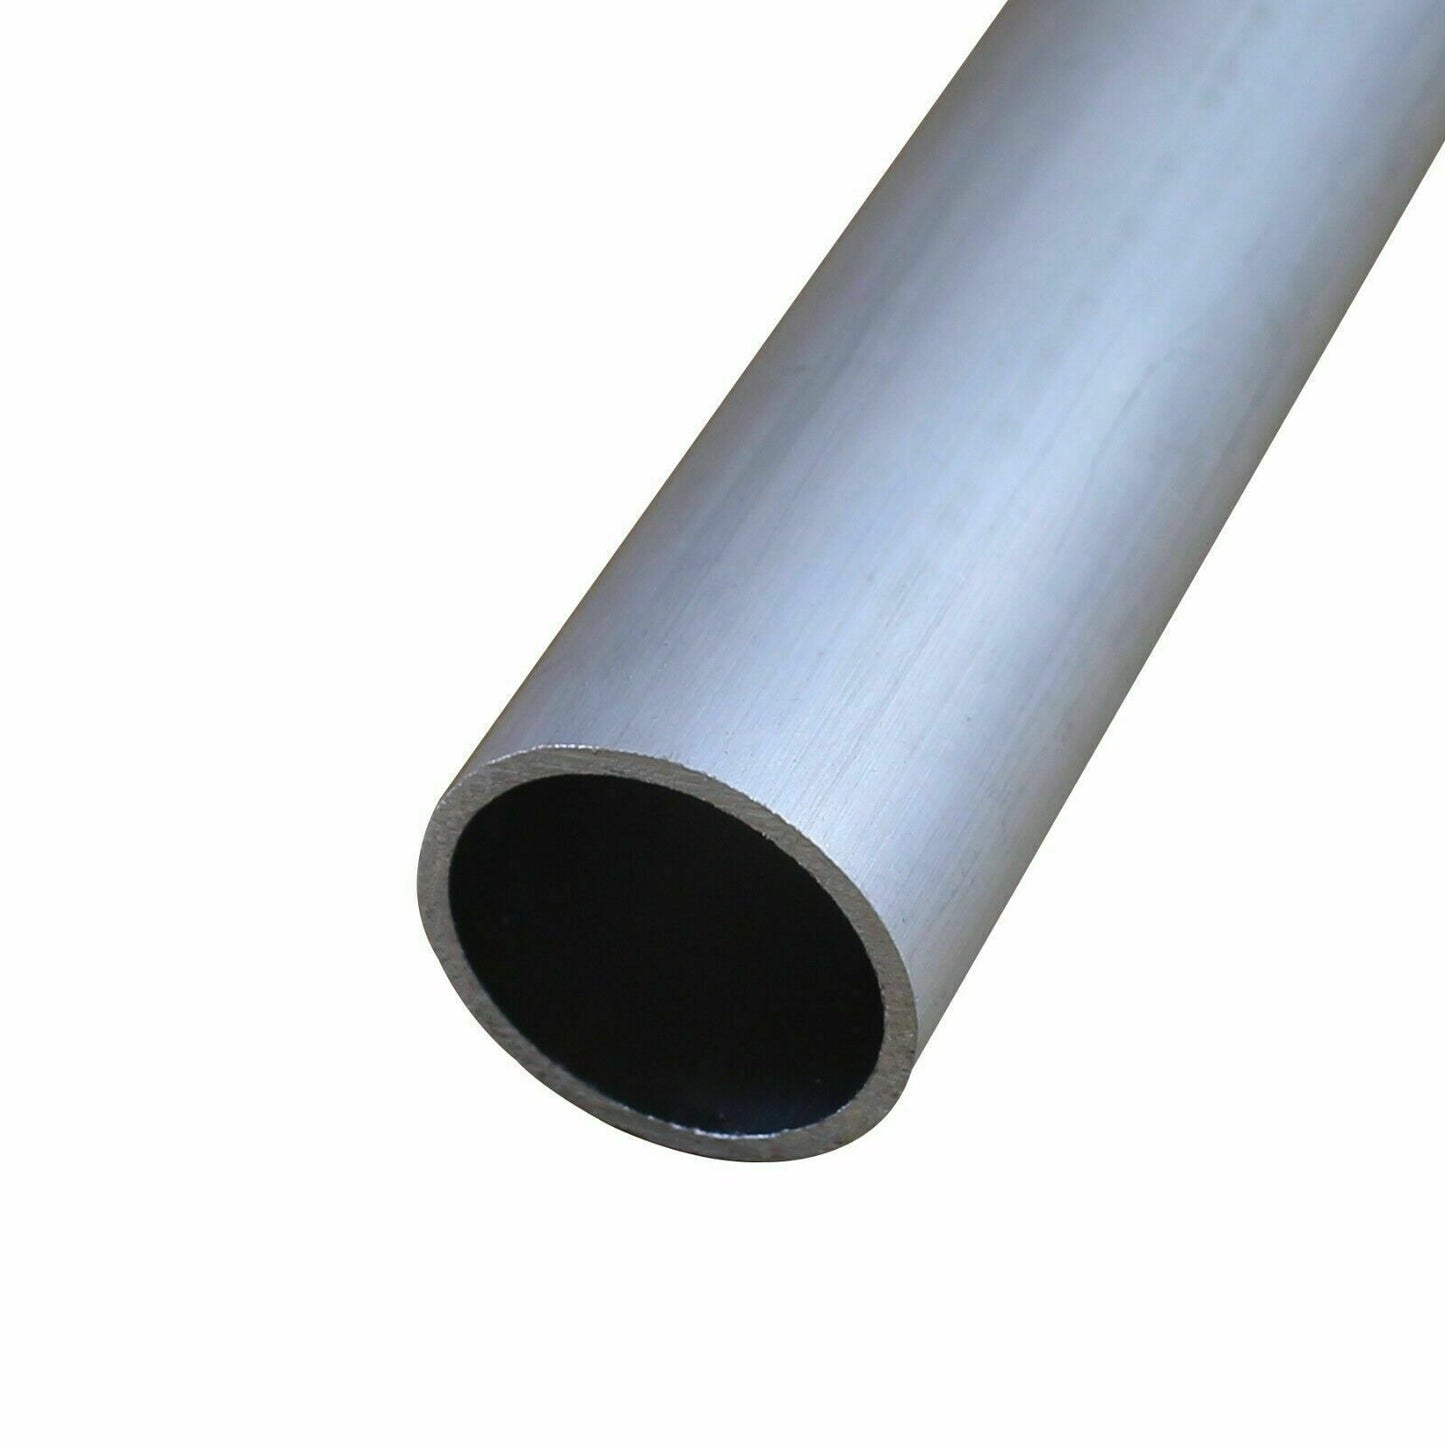 OD 20 mm ID 14 mm 1 Pcs Aluminum Round Tube Pipe